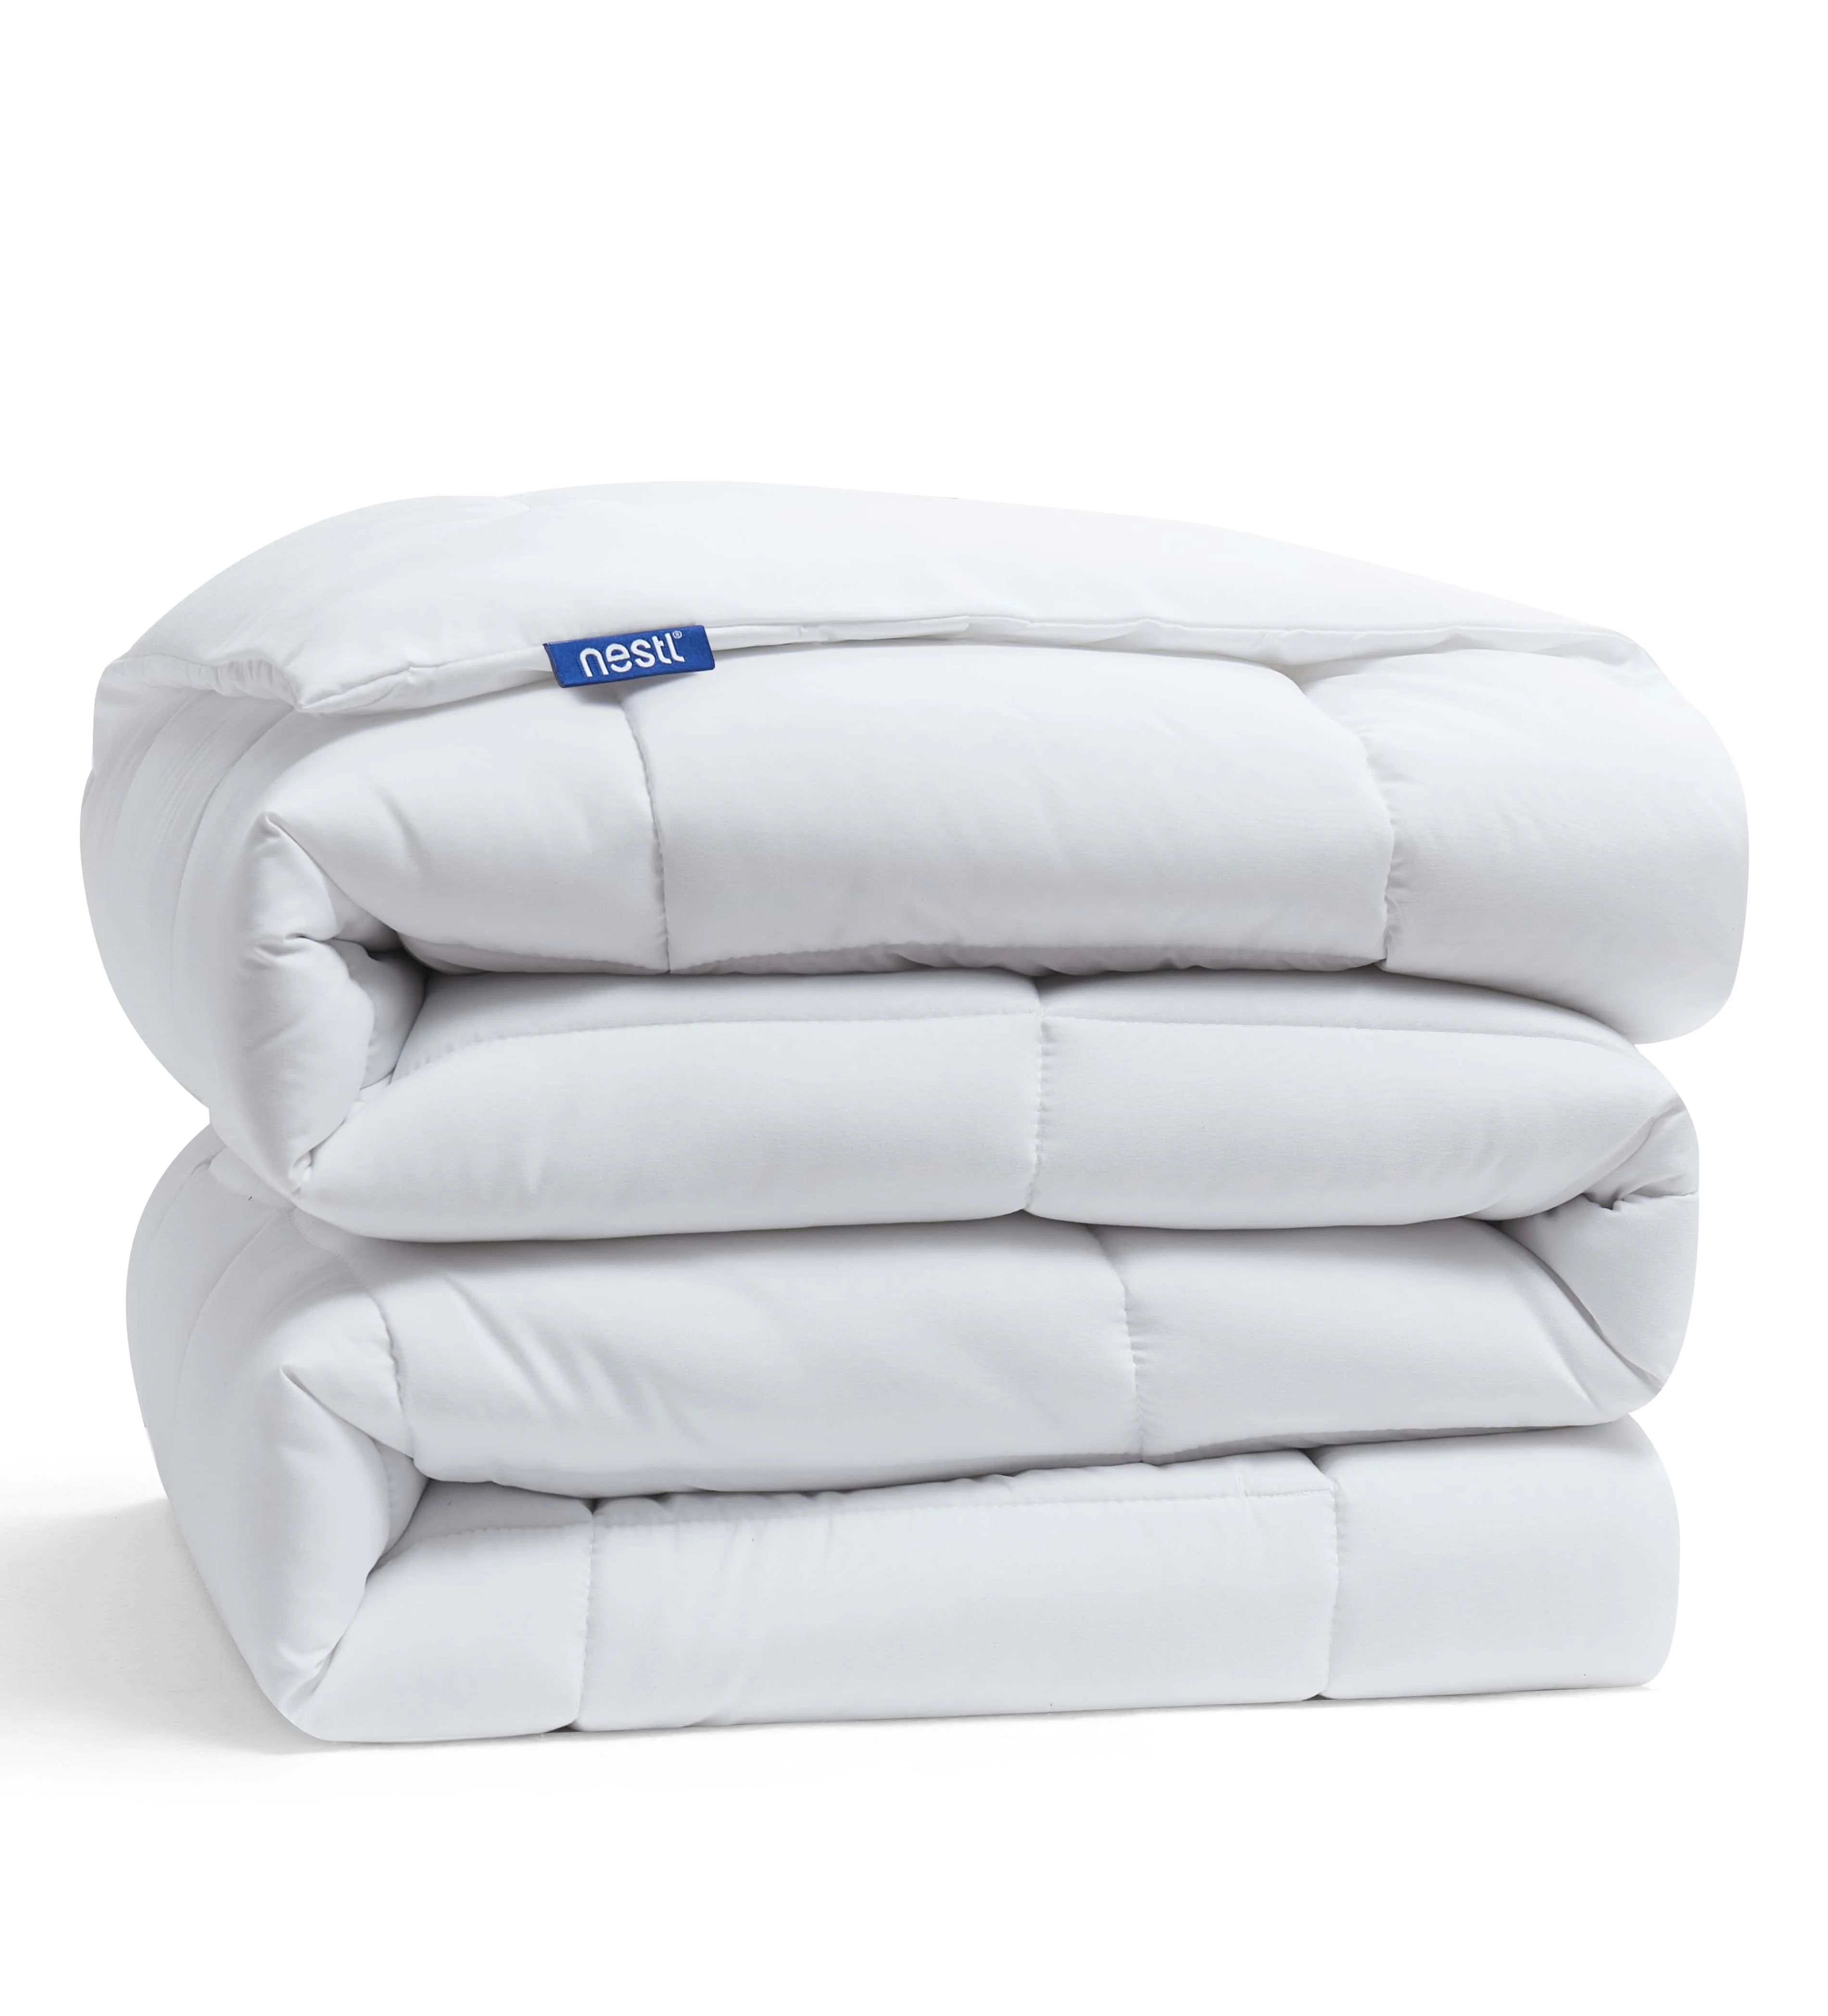 Nestl Comforter, Quilted Down Alternative Duvet Insert, All-Season Bedding Queen Comforter, White | Walmart (US)